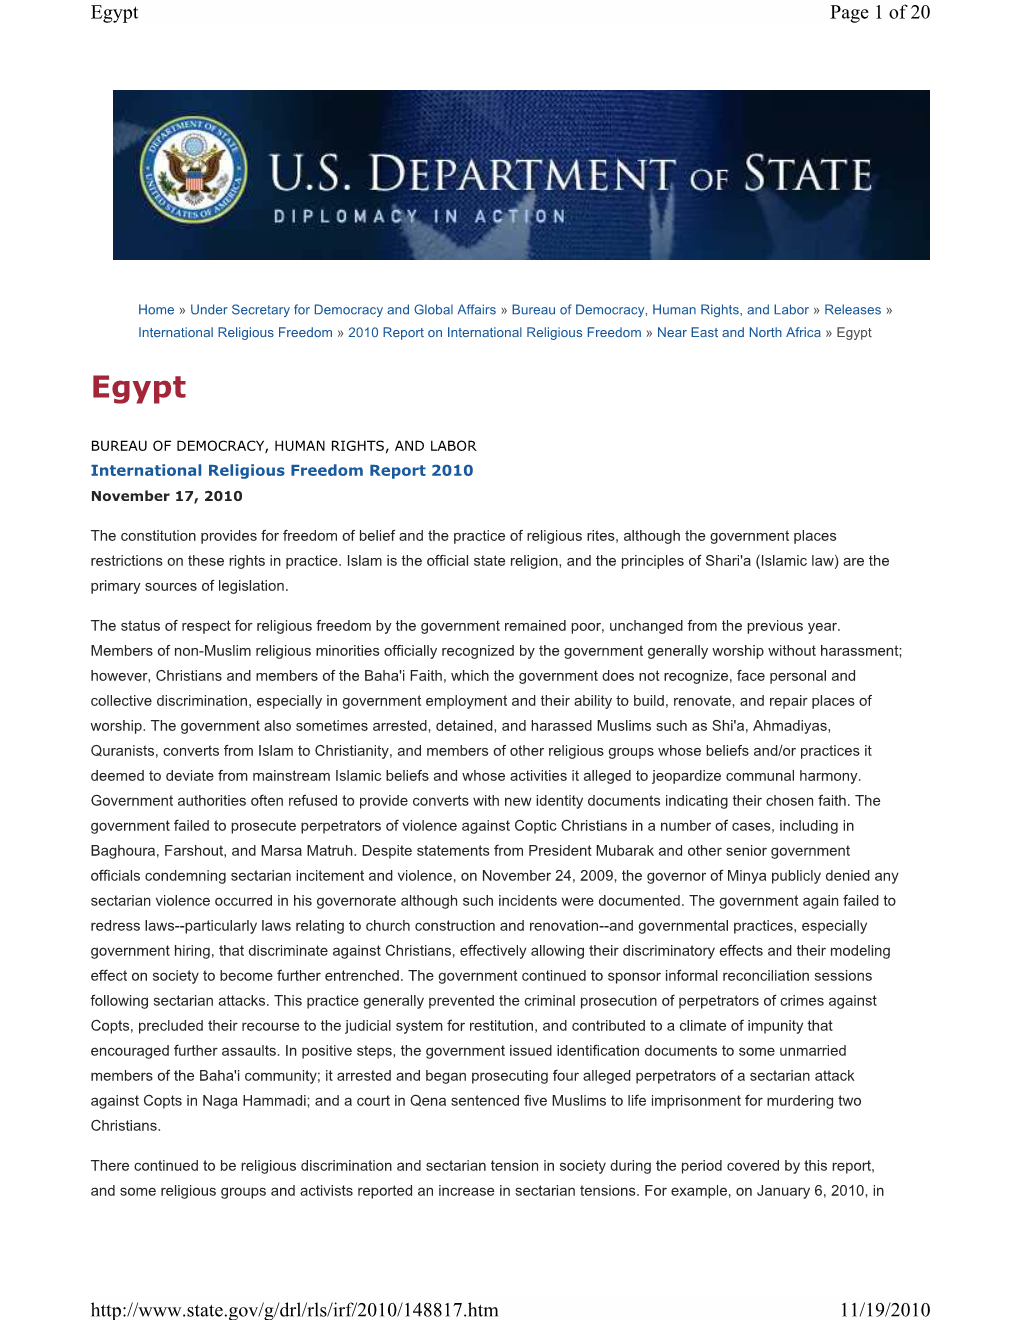 Report on International Religious Freedom 2010: Egypt